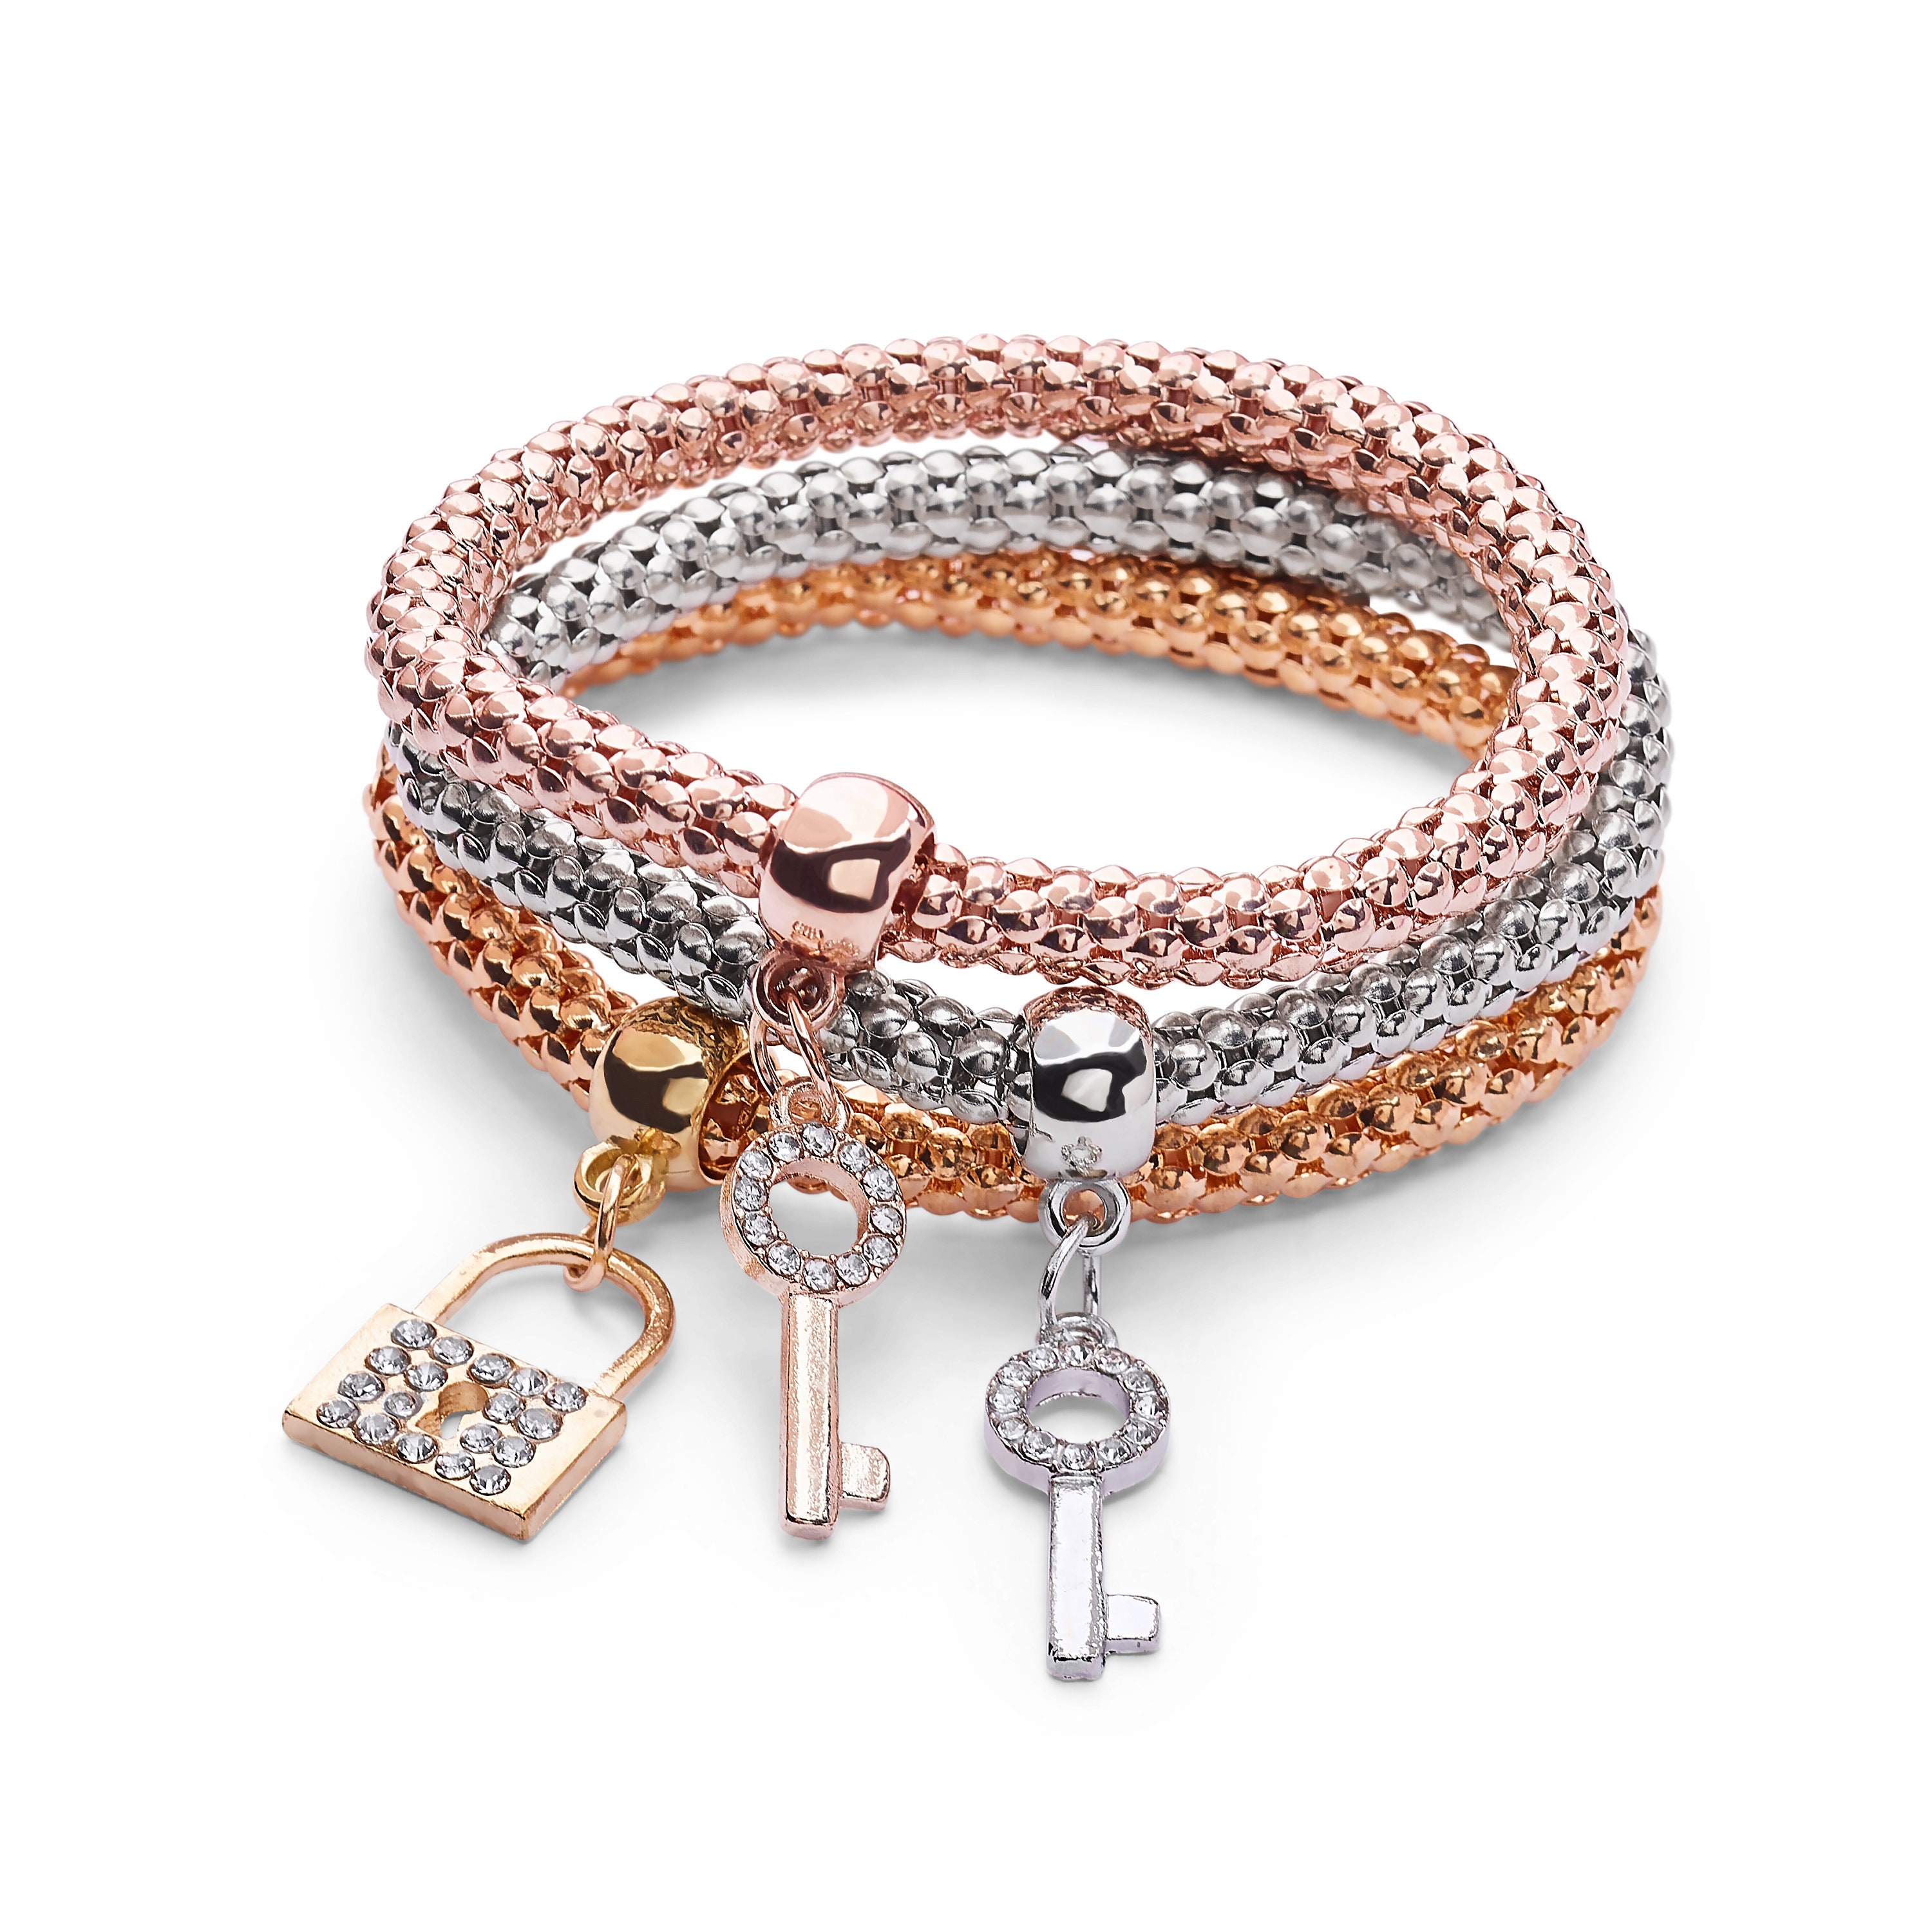 Luluadorn Women Couple Love Key Lock Heart Charm for Bracelet Compatible  with Pandora Charm Bracelets Birthday Anniversary Christmas